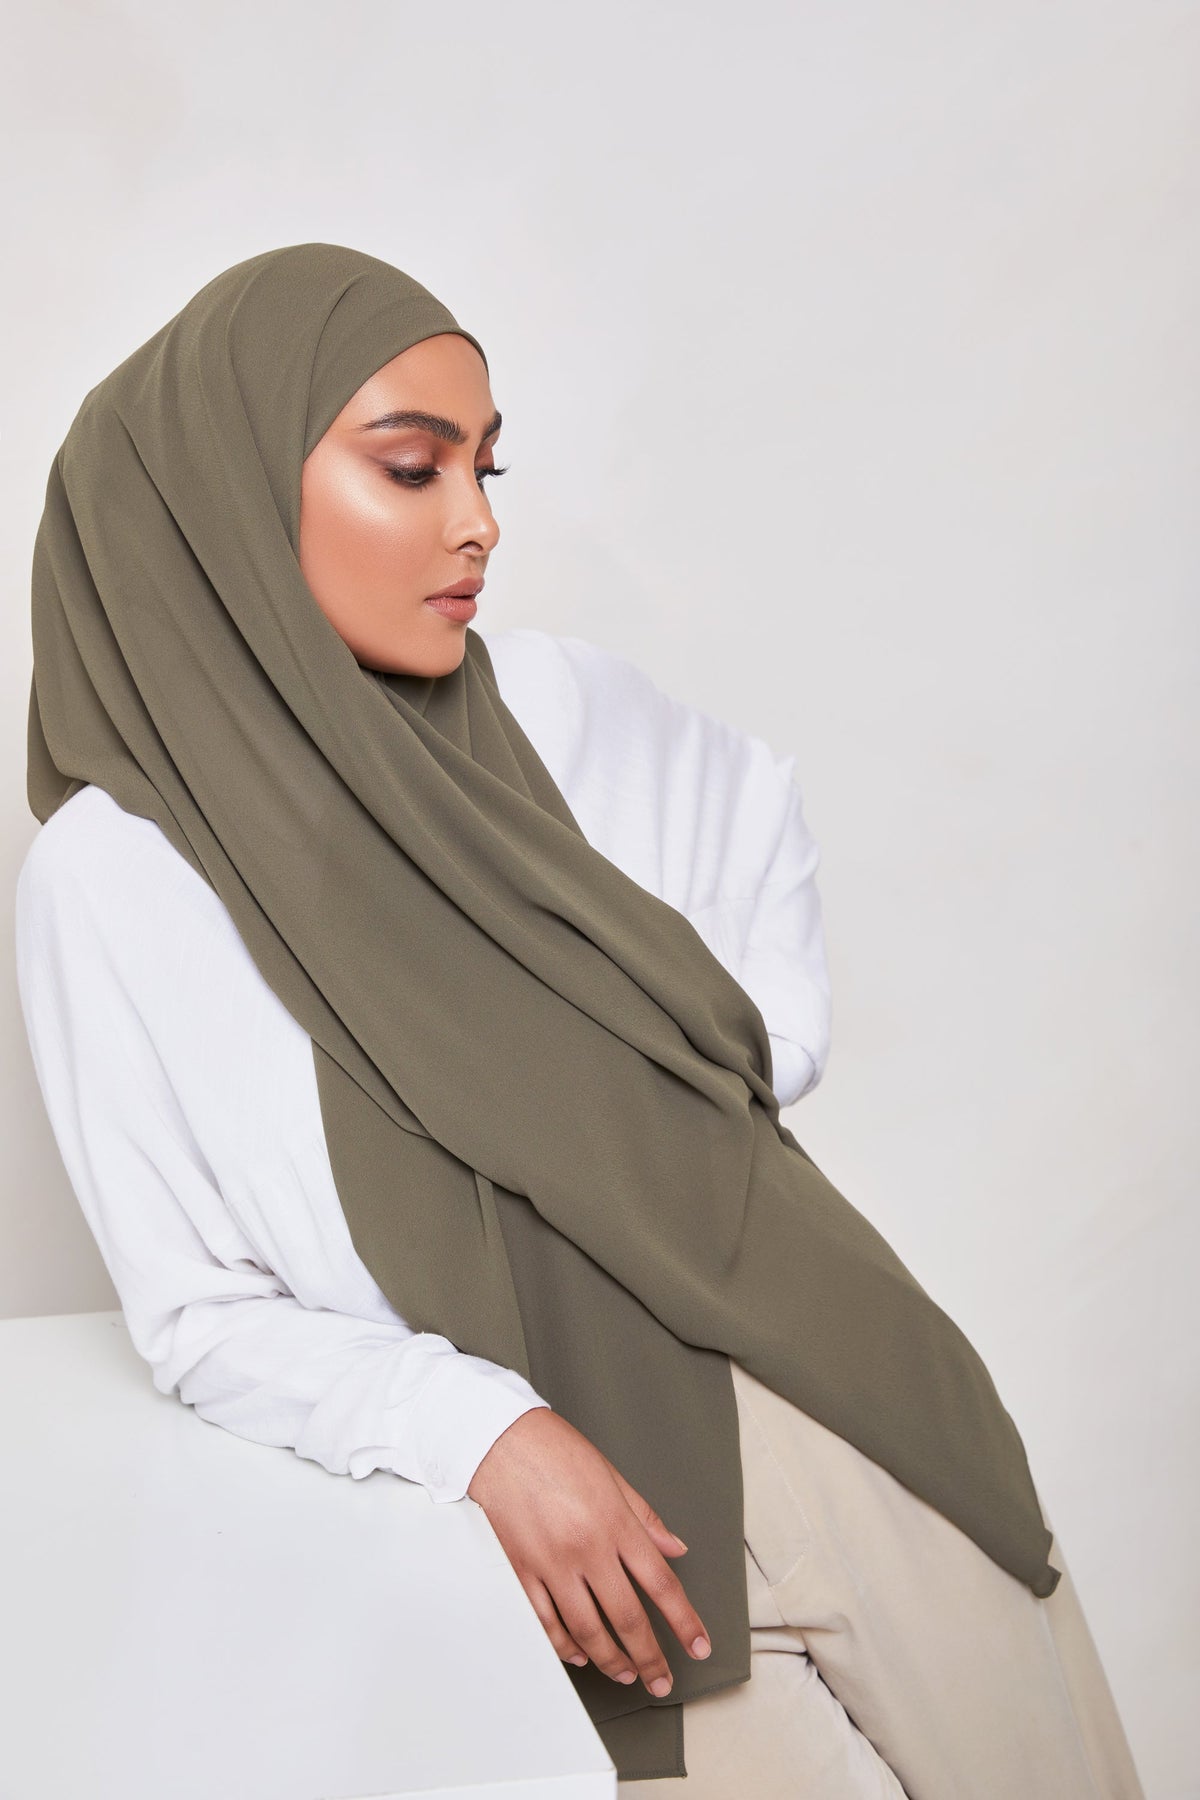 TEXTURE Everyday Chiffon Hijab - Peace Green epschoolboard 